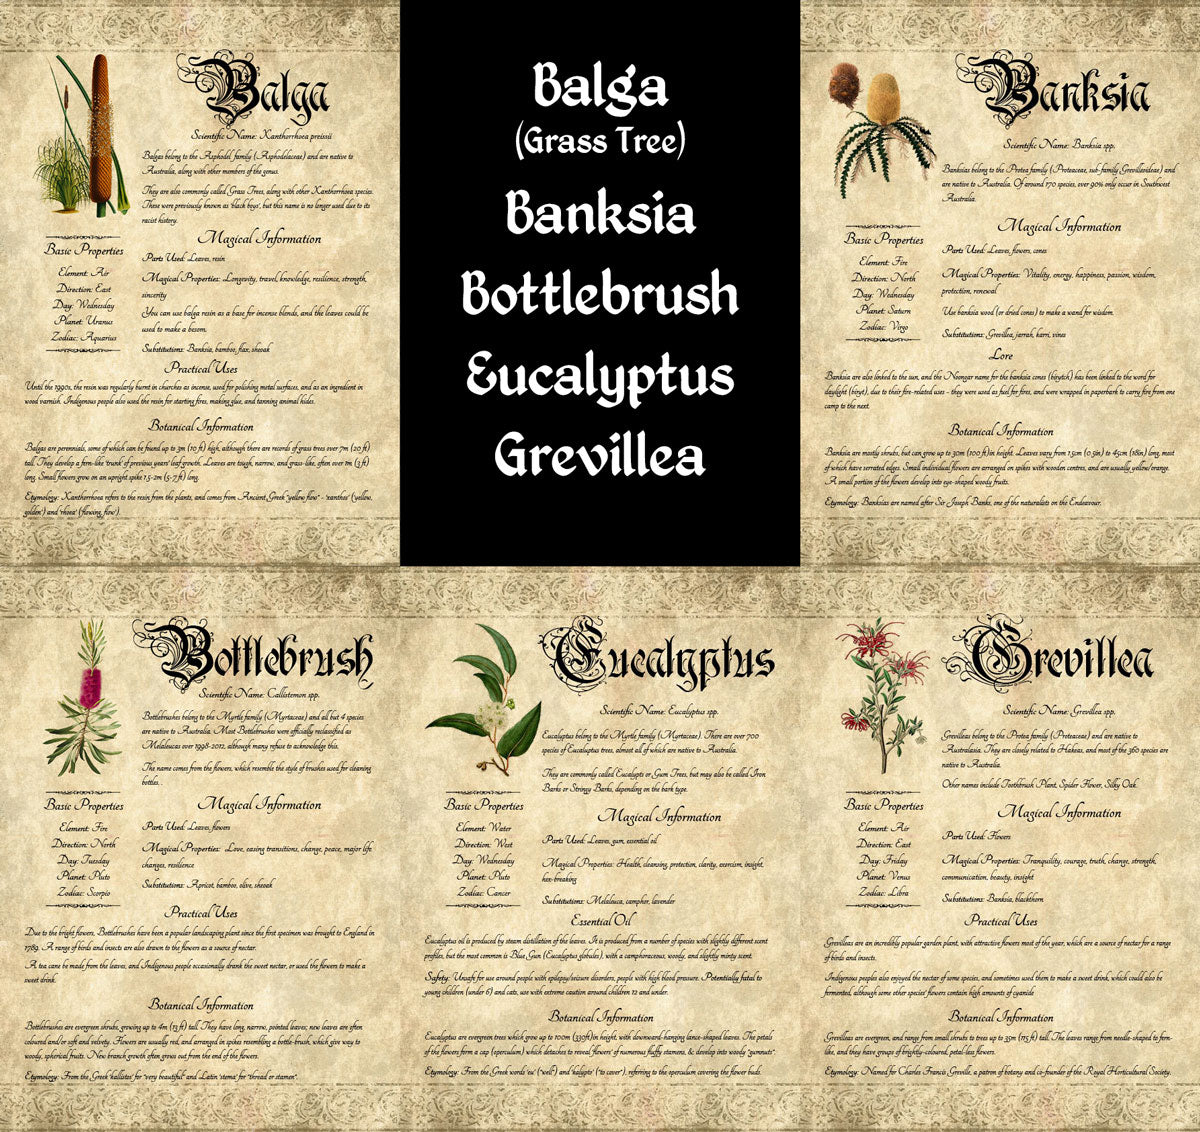 Collage of antique-style grimoire pages; text lists "Balga (Grass tree), Banksia, Bottlebrush, Eucalyptus, Grevillea"